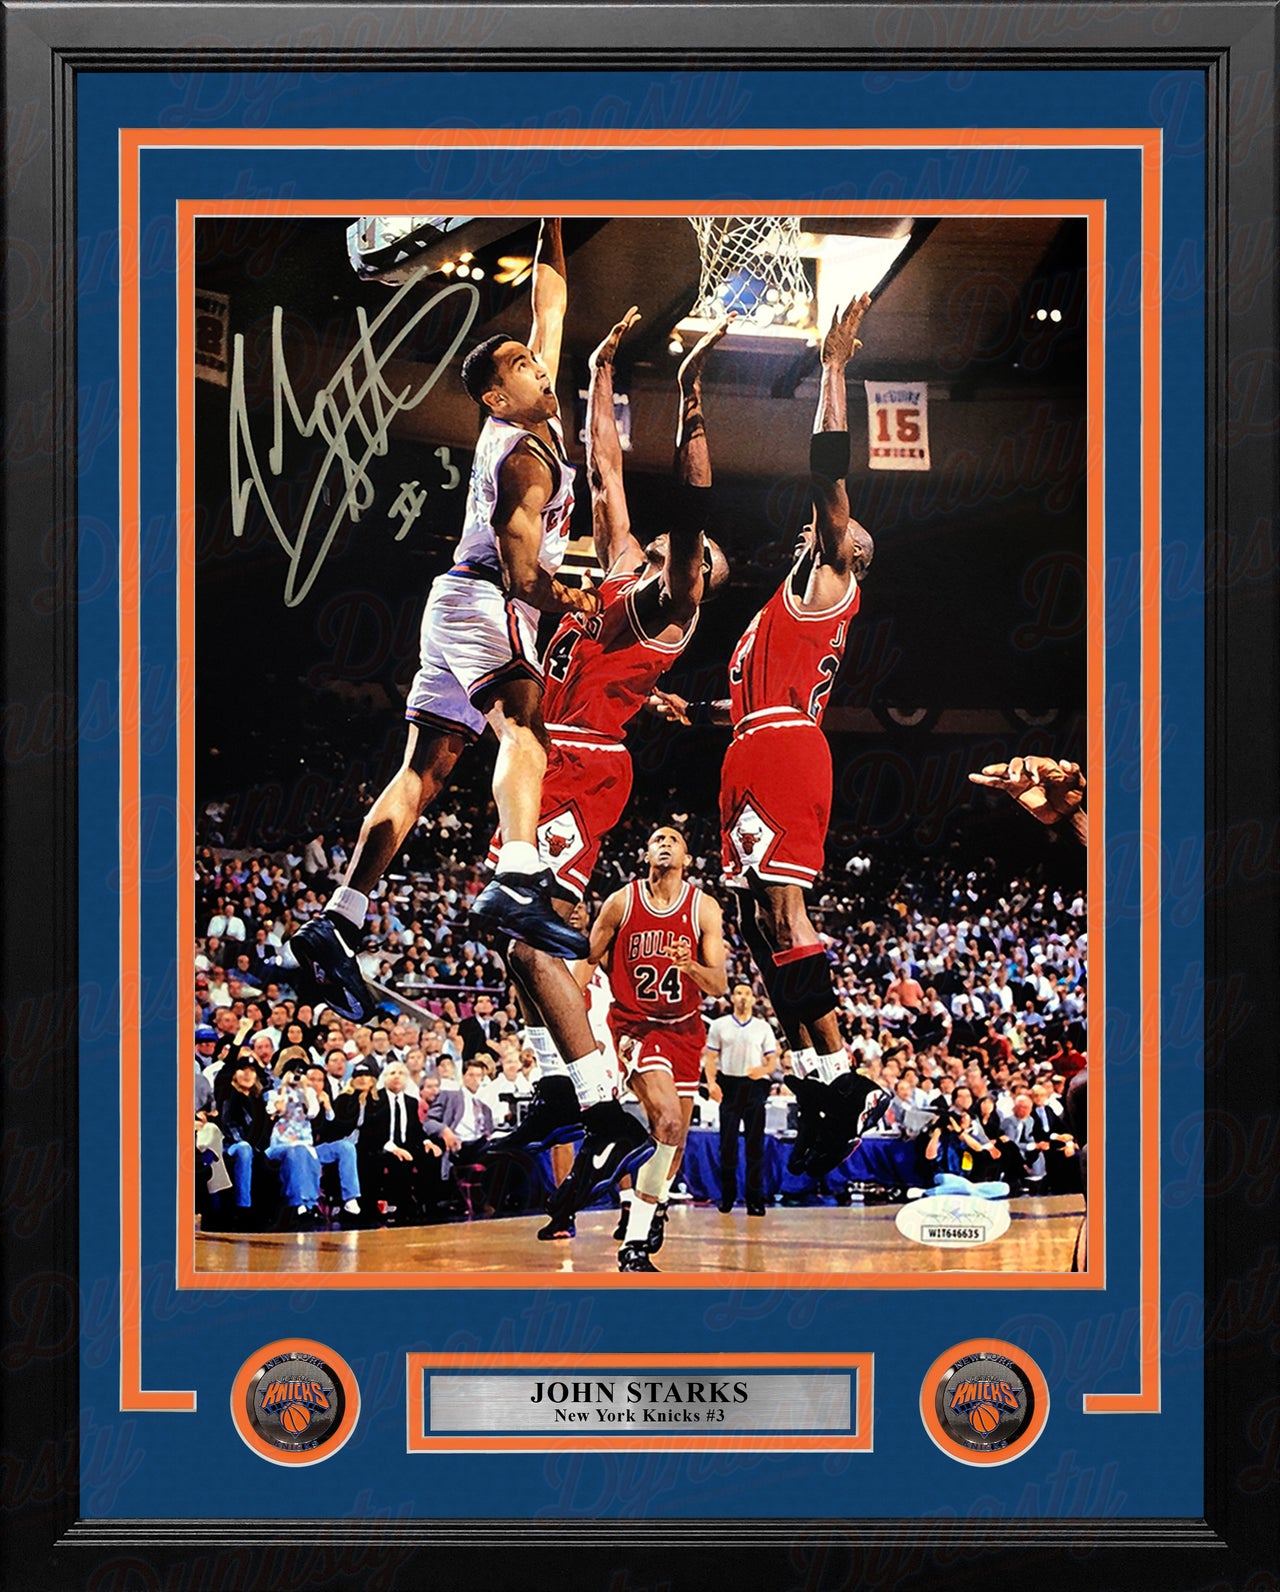 John Starks v. Jordan's Bulls New York Knicks Autographed Framed Basketball Photo - Dynasty Sports & Framing 